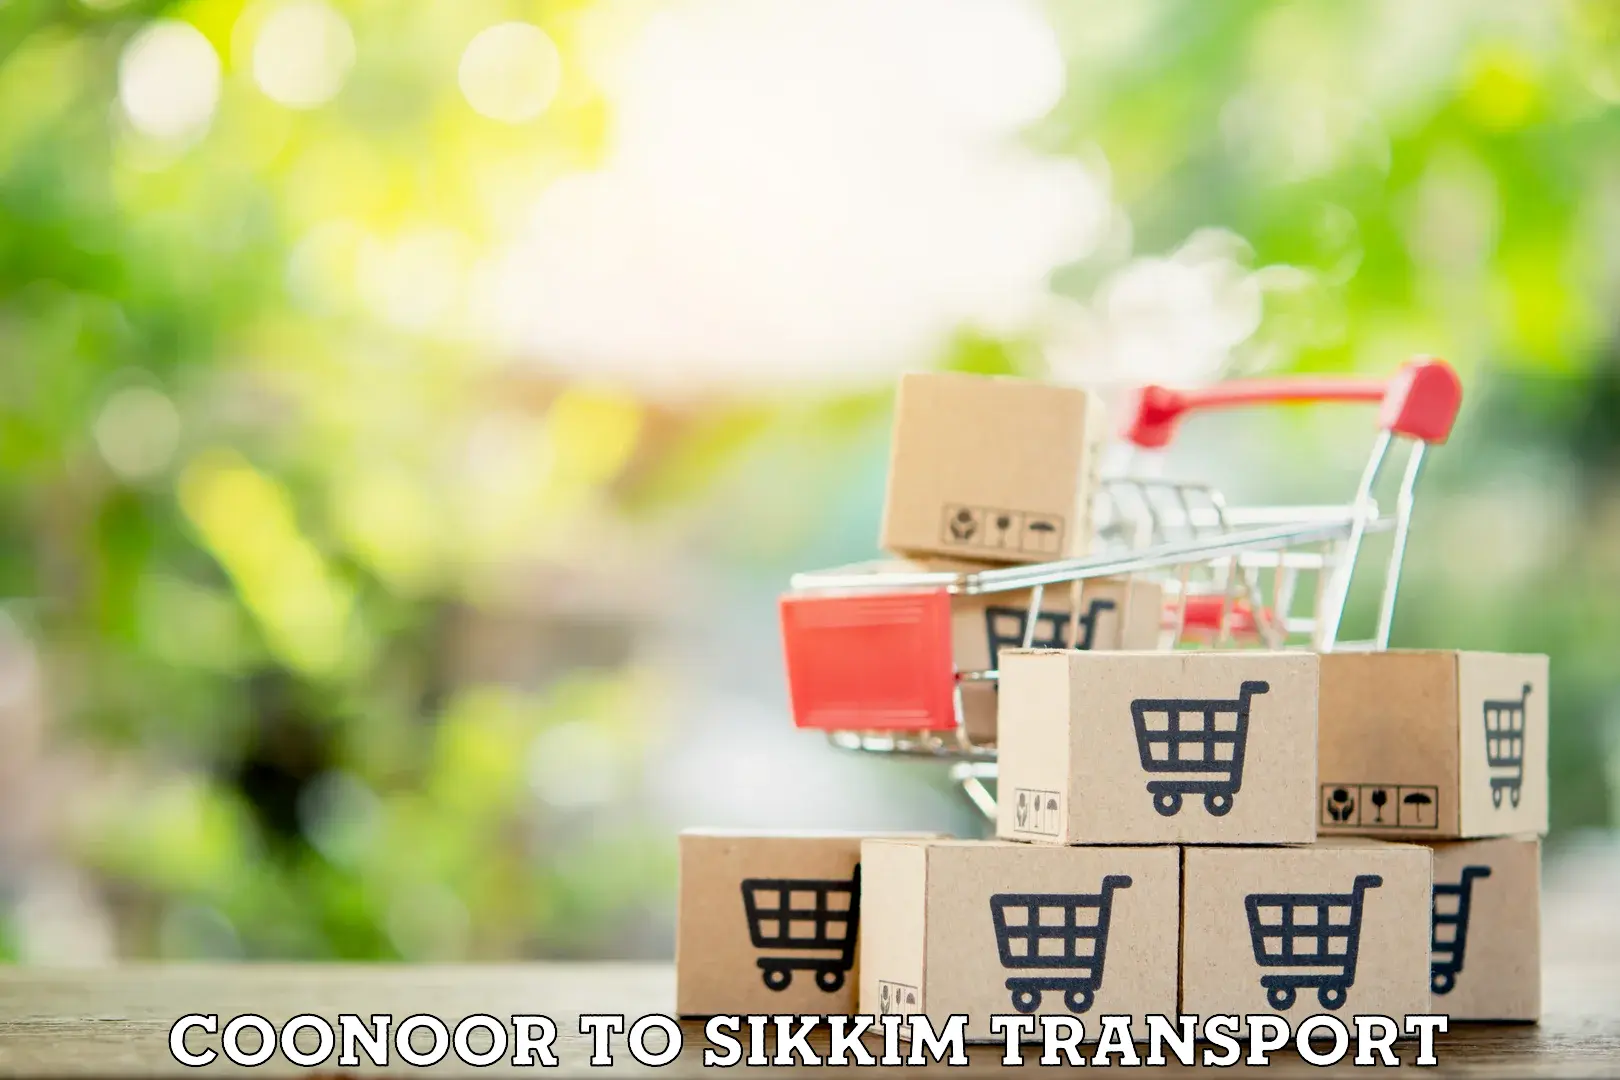 Shipping partner Coonoor to Sikkim